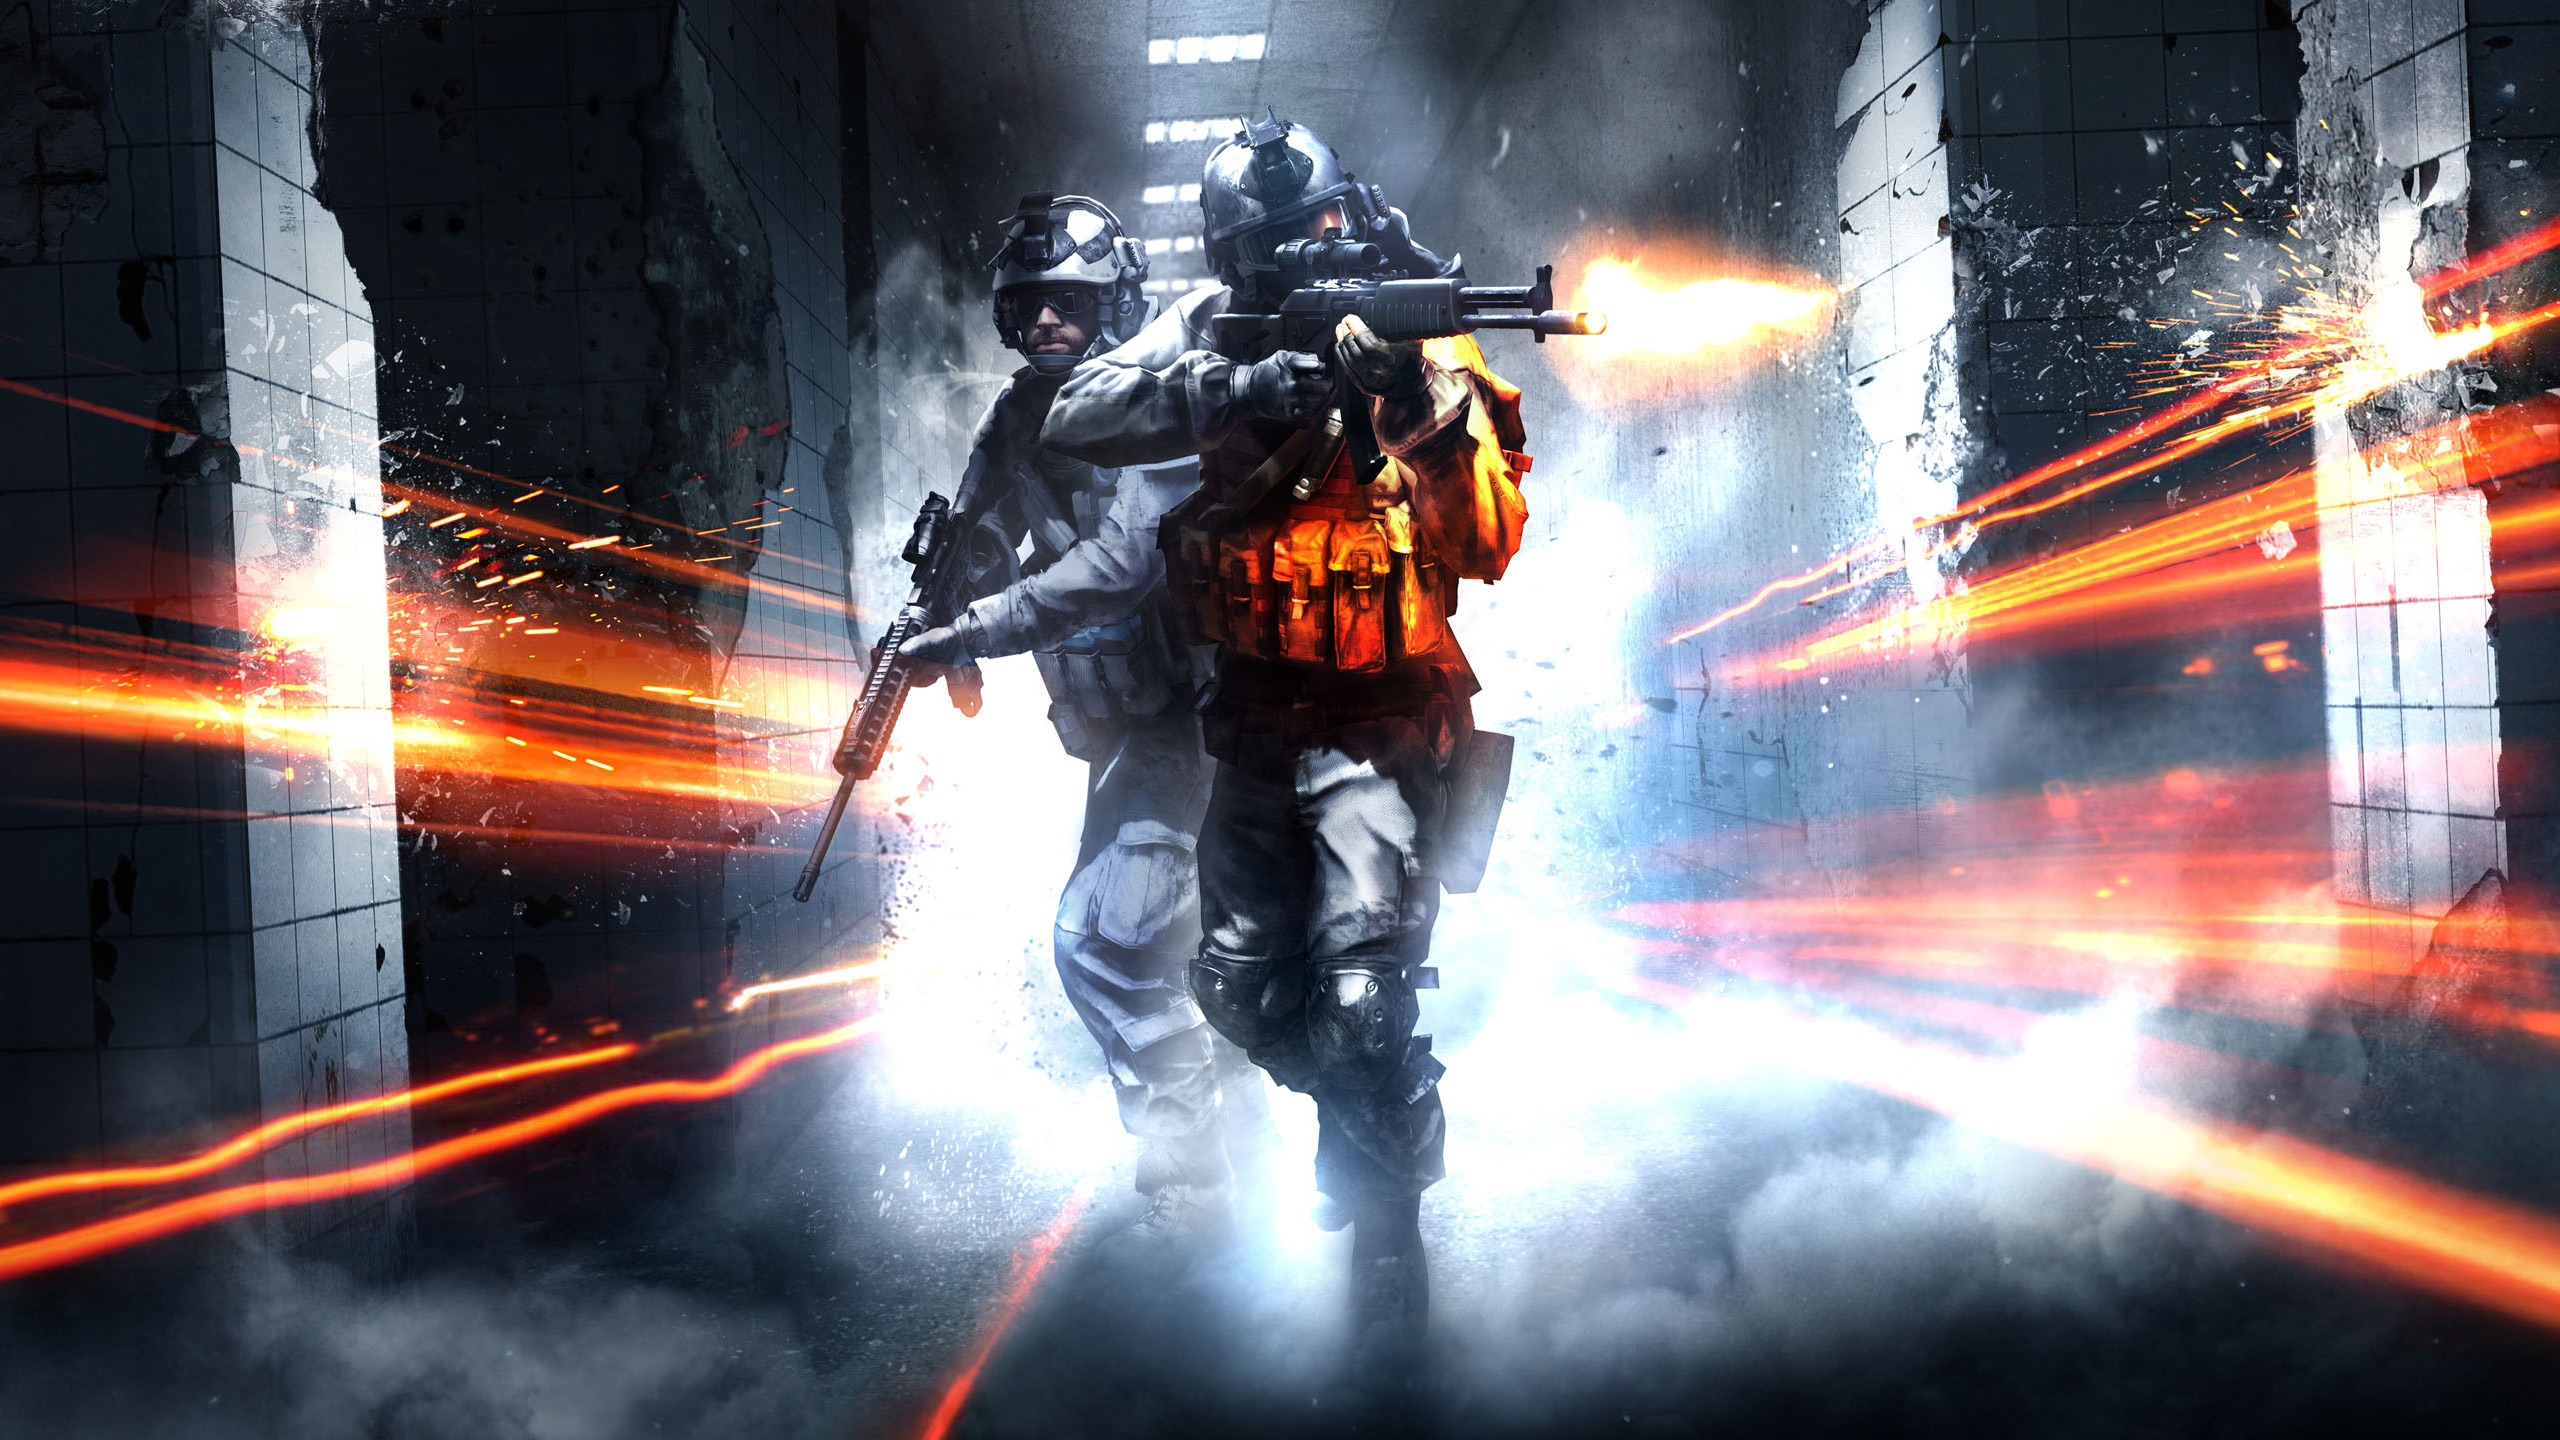 Battlefield 3 Co Op for 2560x1440 HDTV resolution